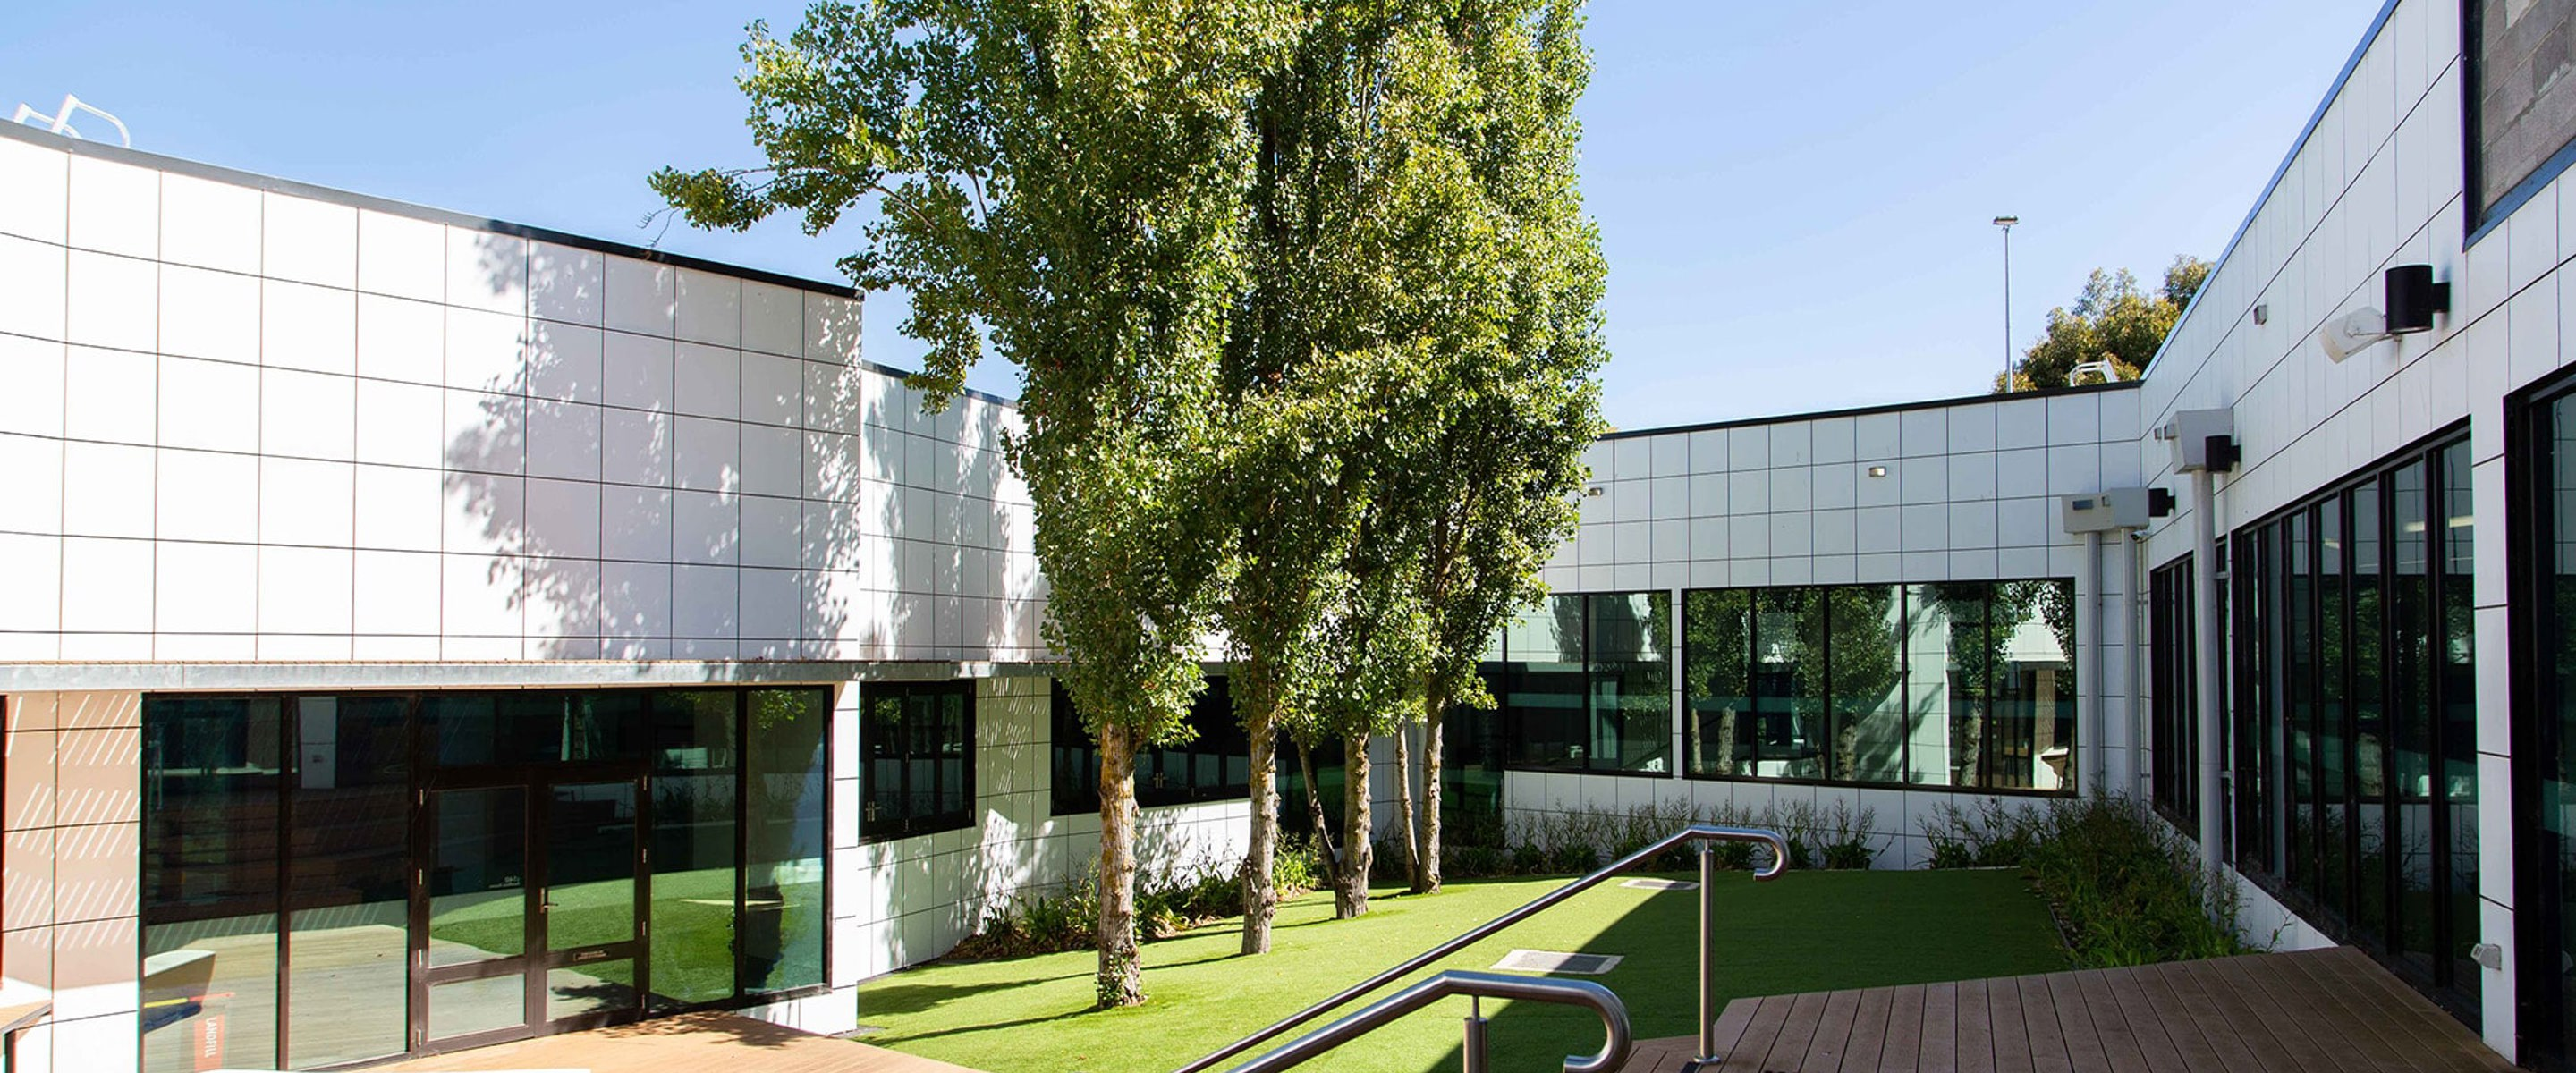 Greensborough campus courtyard